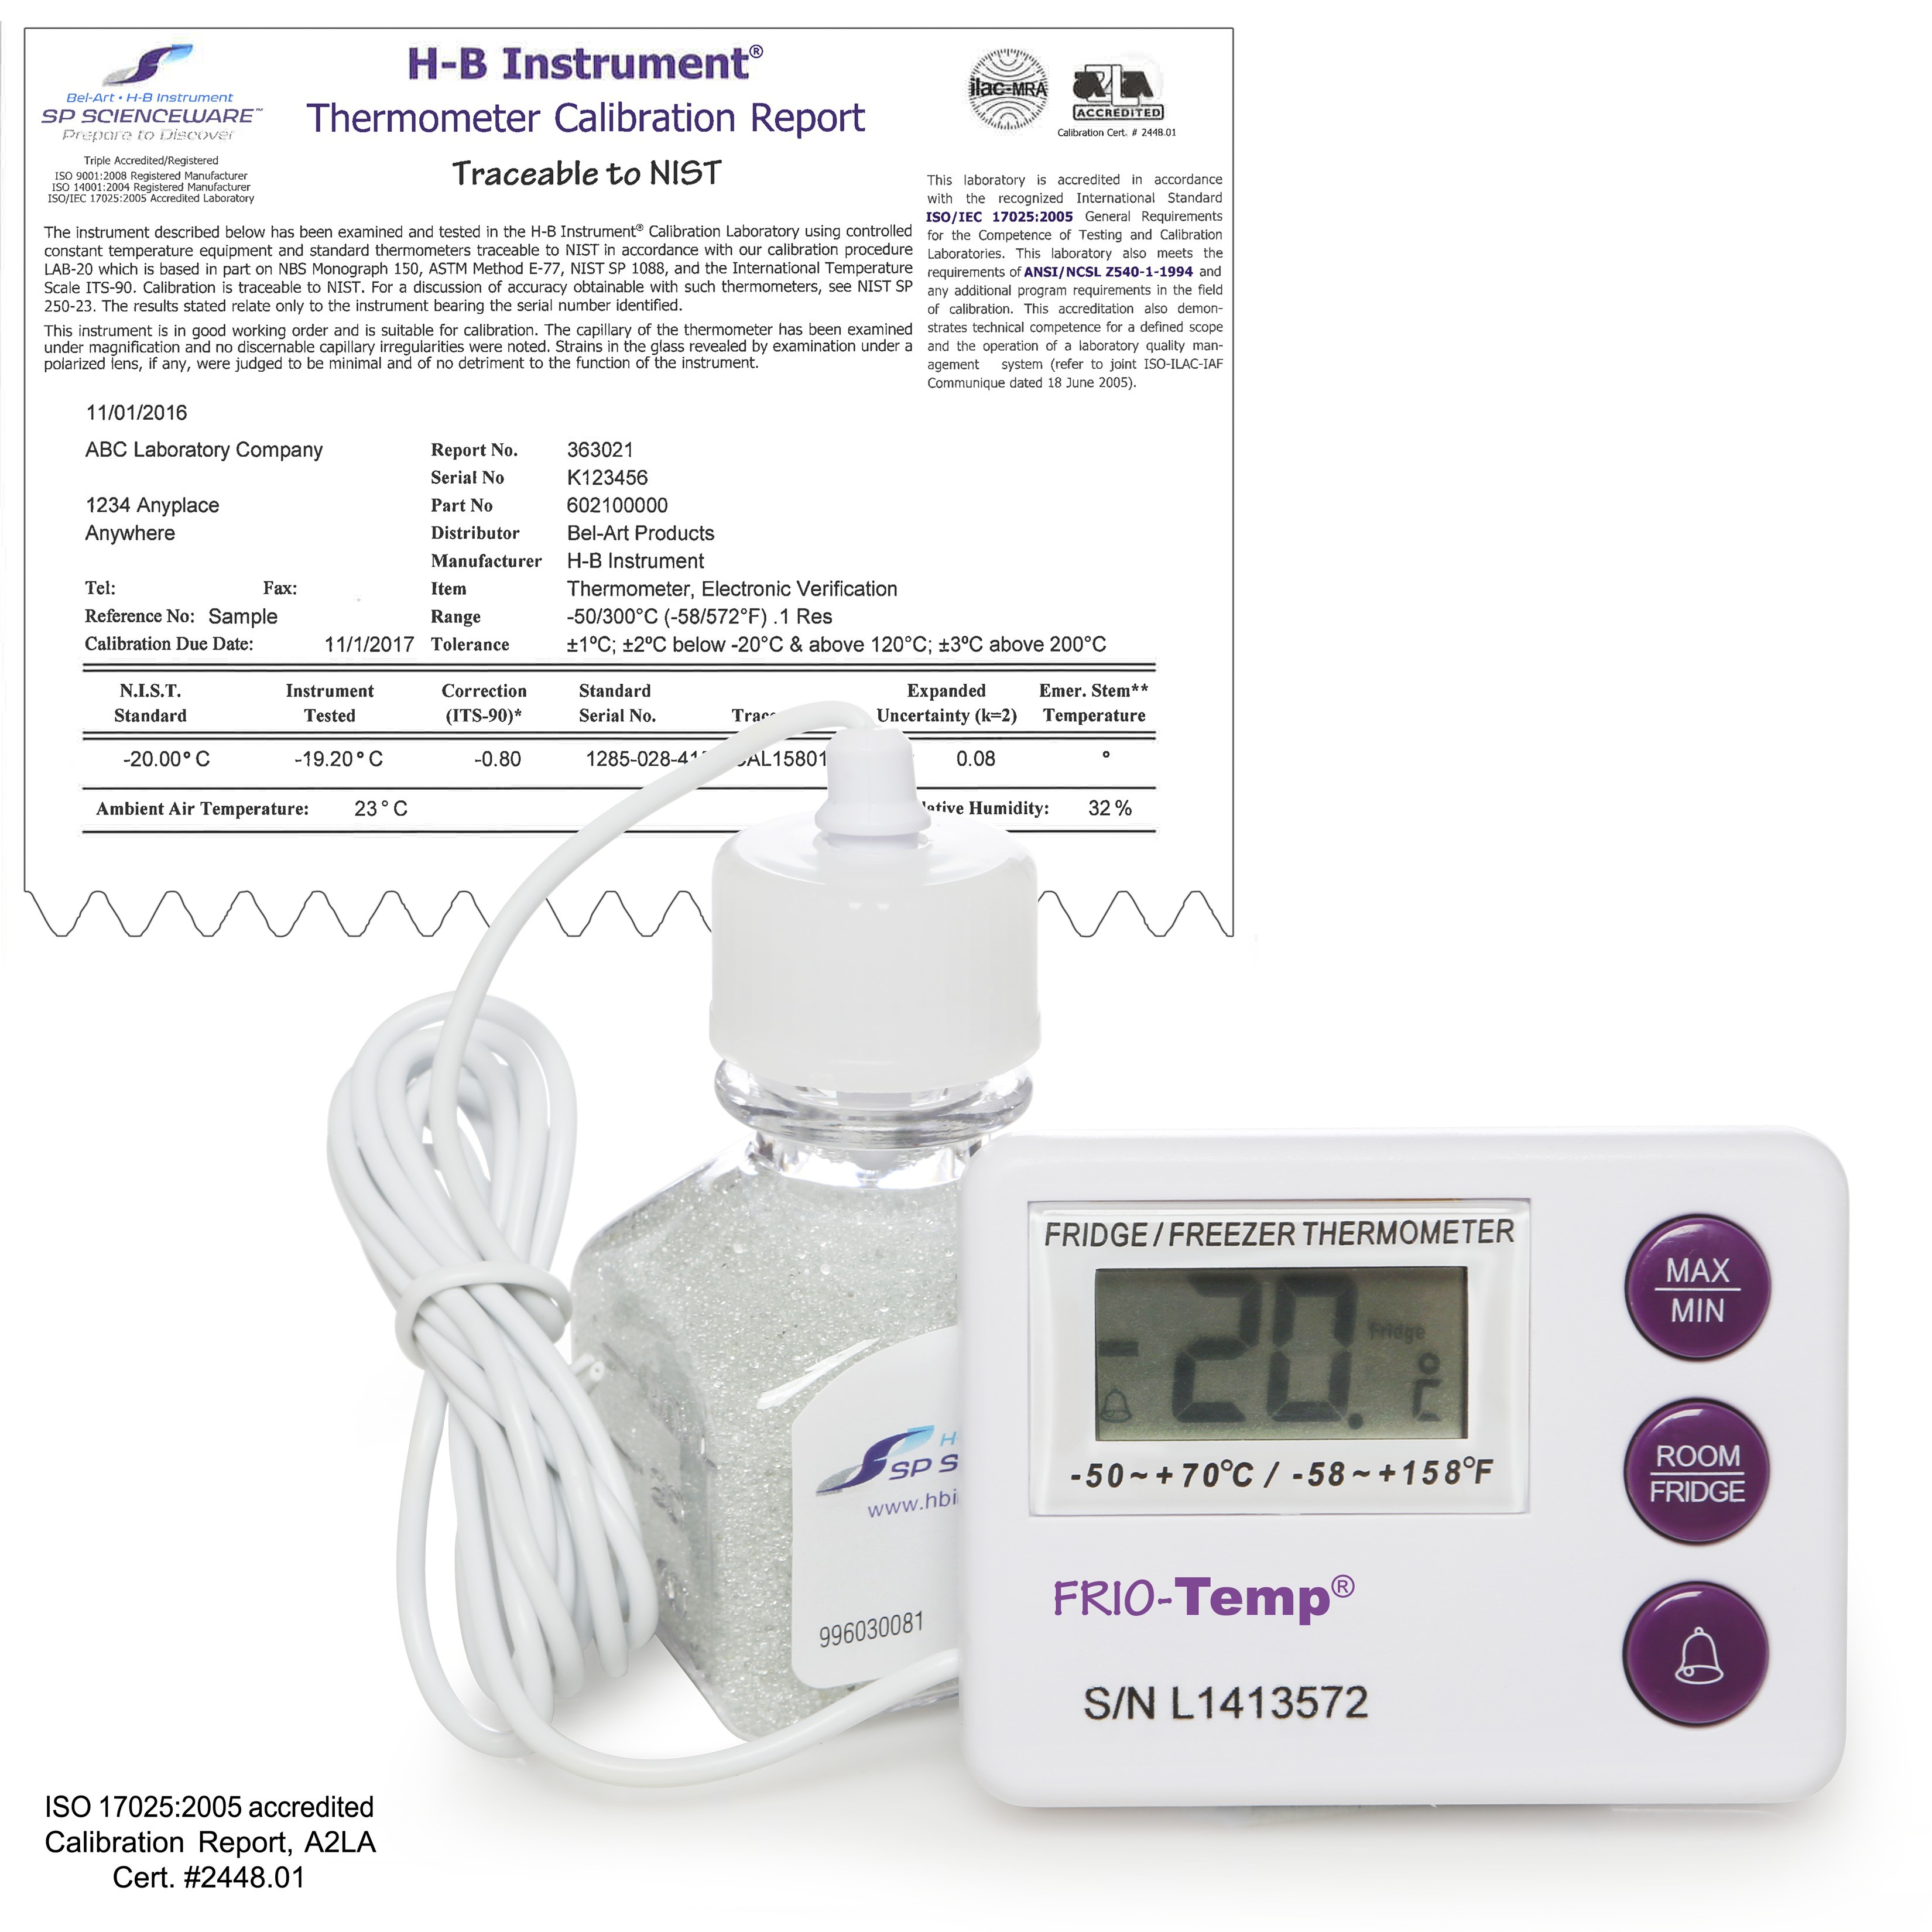 Bel-Art B60210-0700 Electronic Verification Thermometer, 37¡C